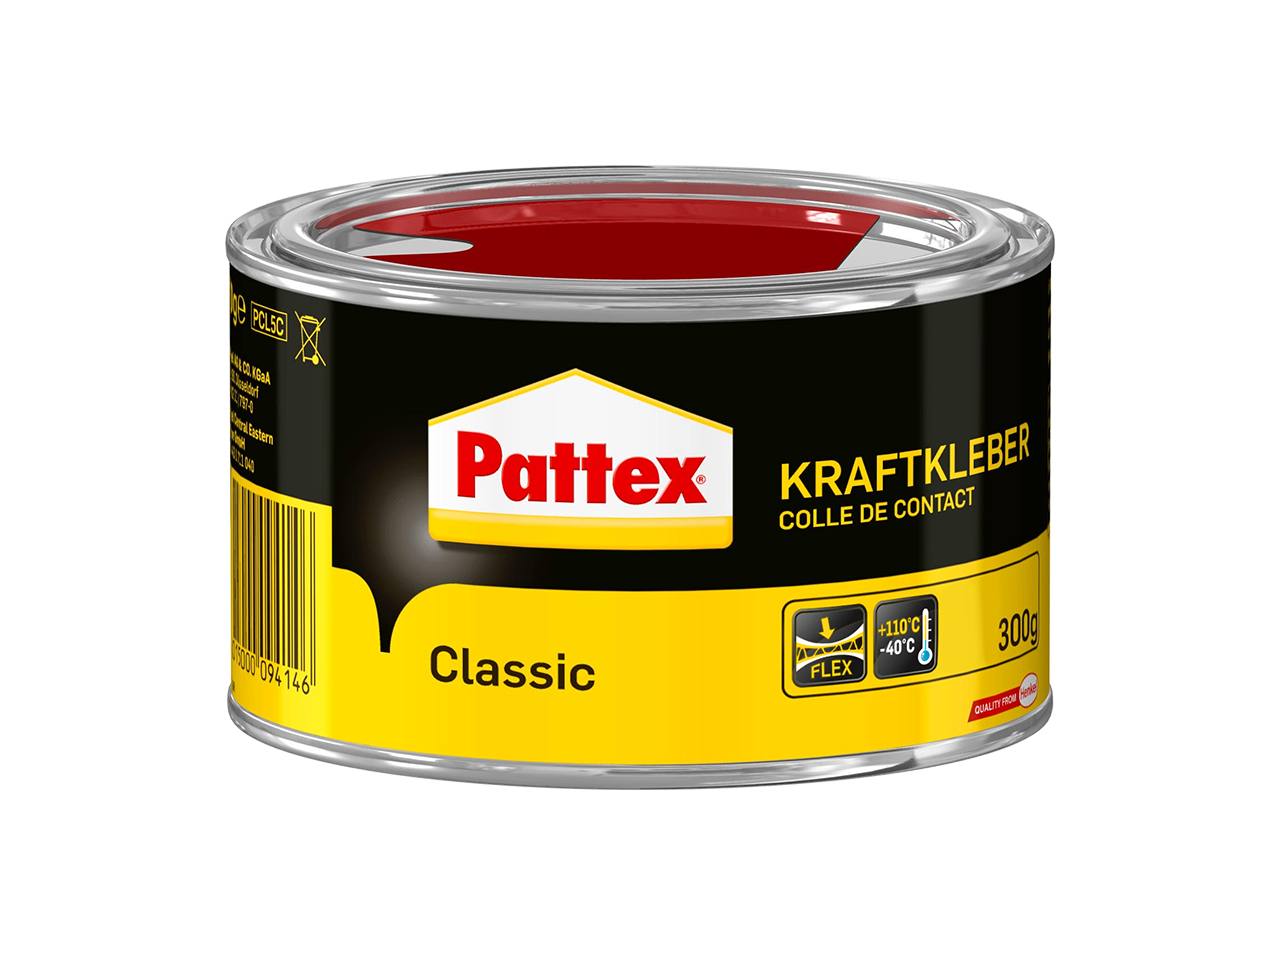 Pattex Kraftkleber 300g 1 Stück